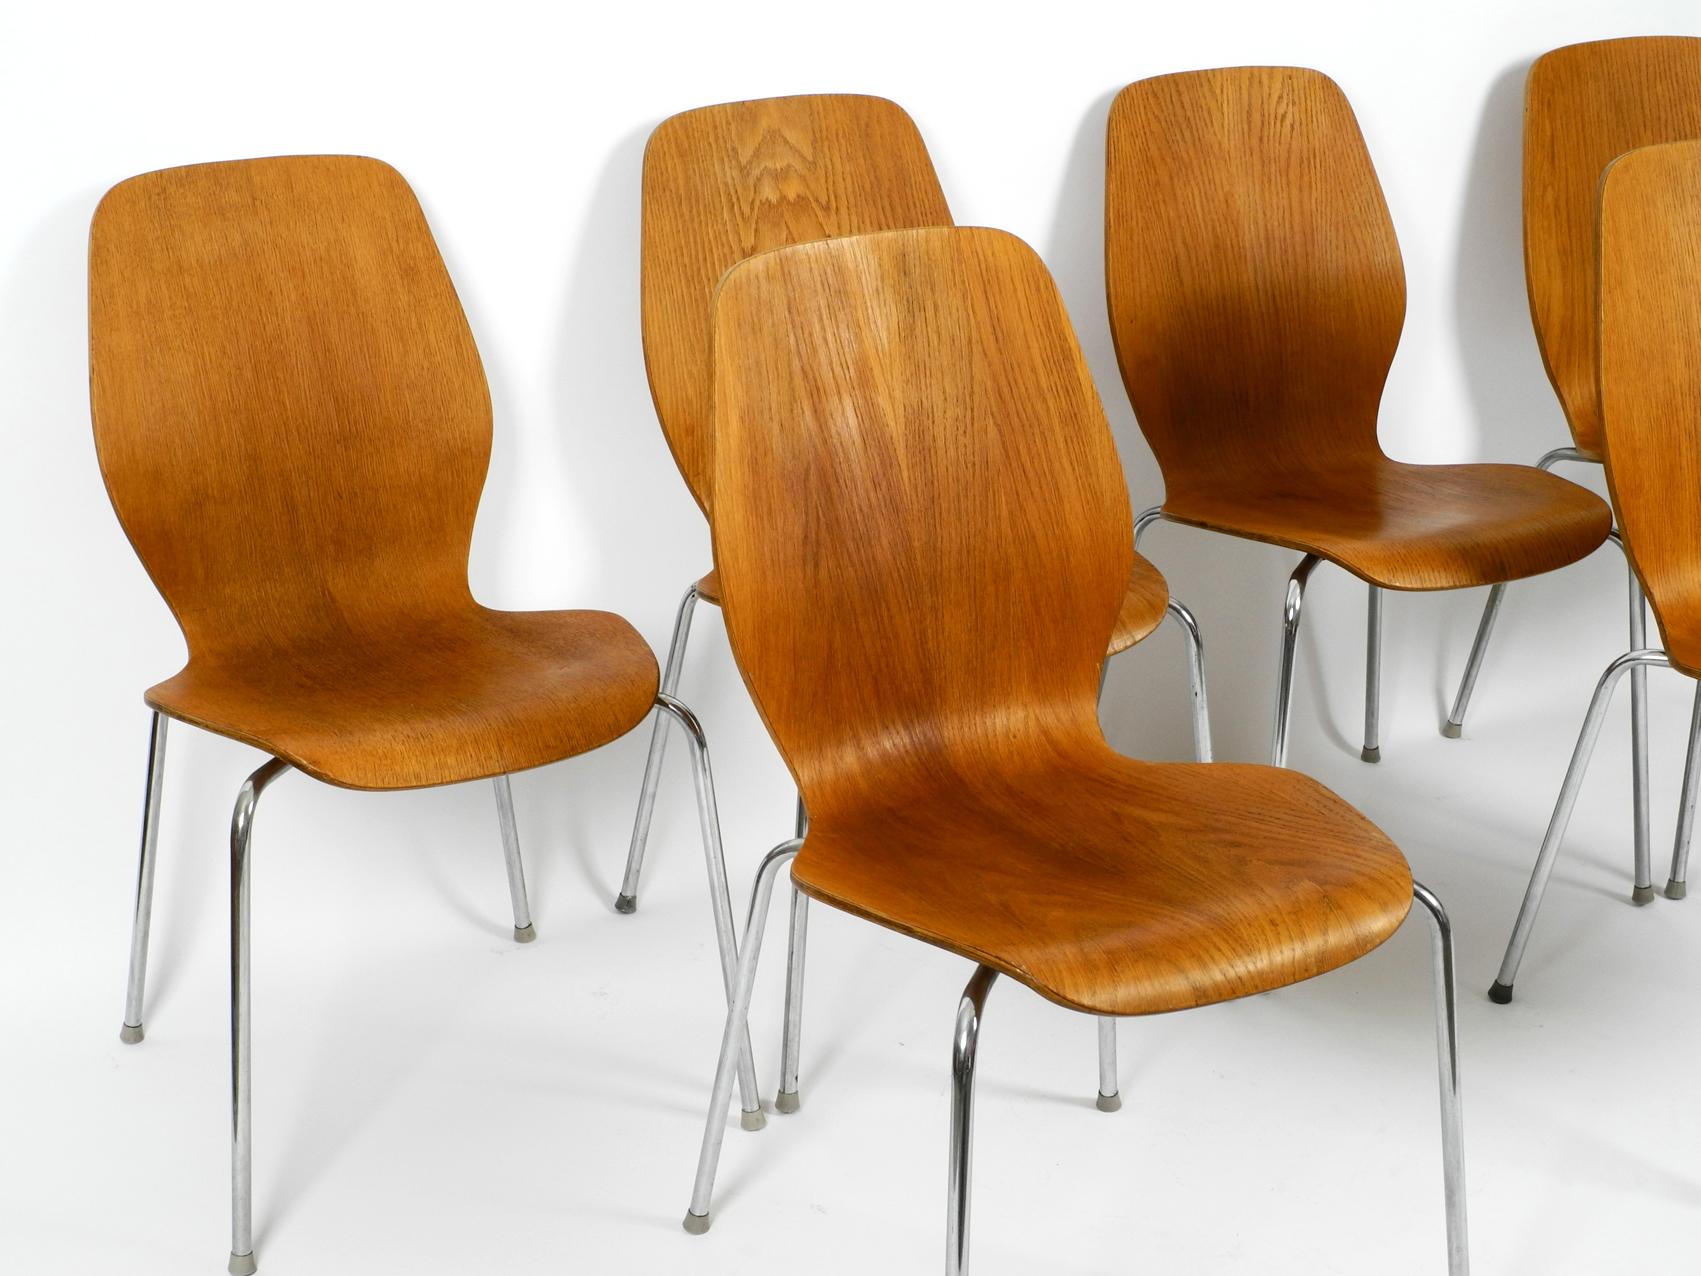 Metal Set of 6 teak plywood chairs by Herbert Hirche for Jofa Stalmobler Denmark